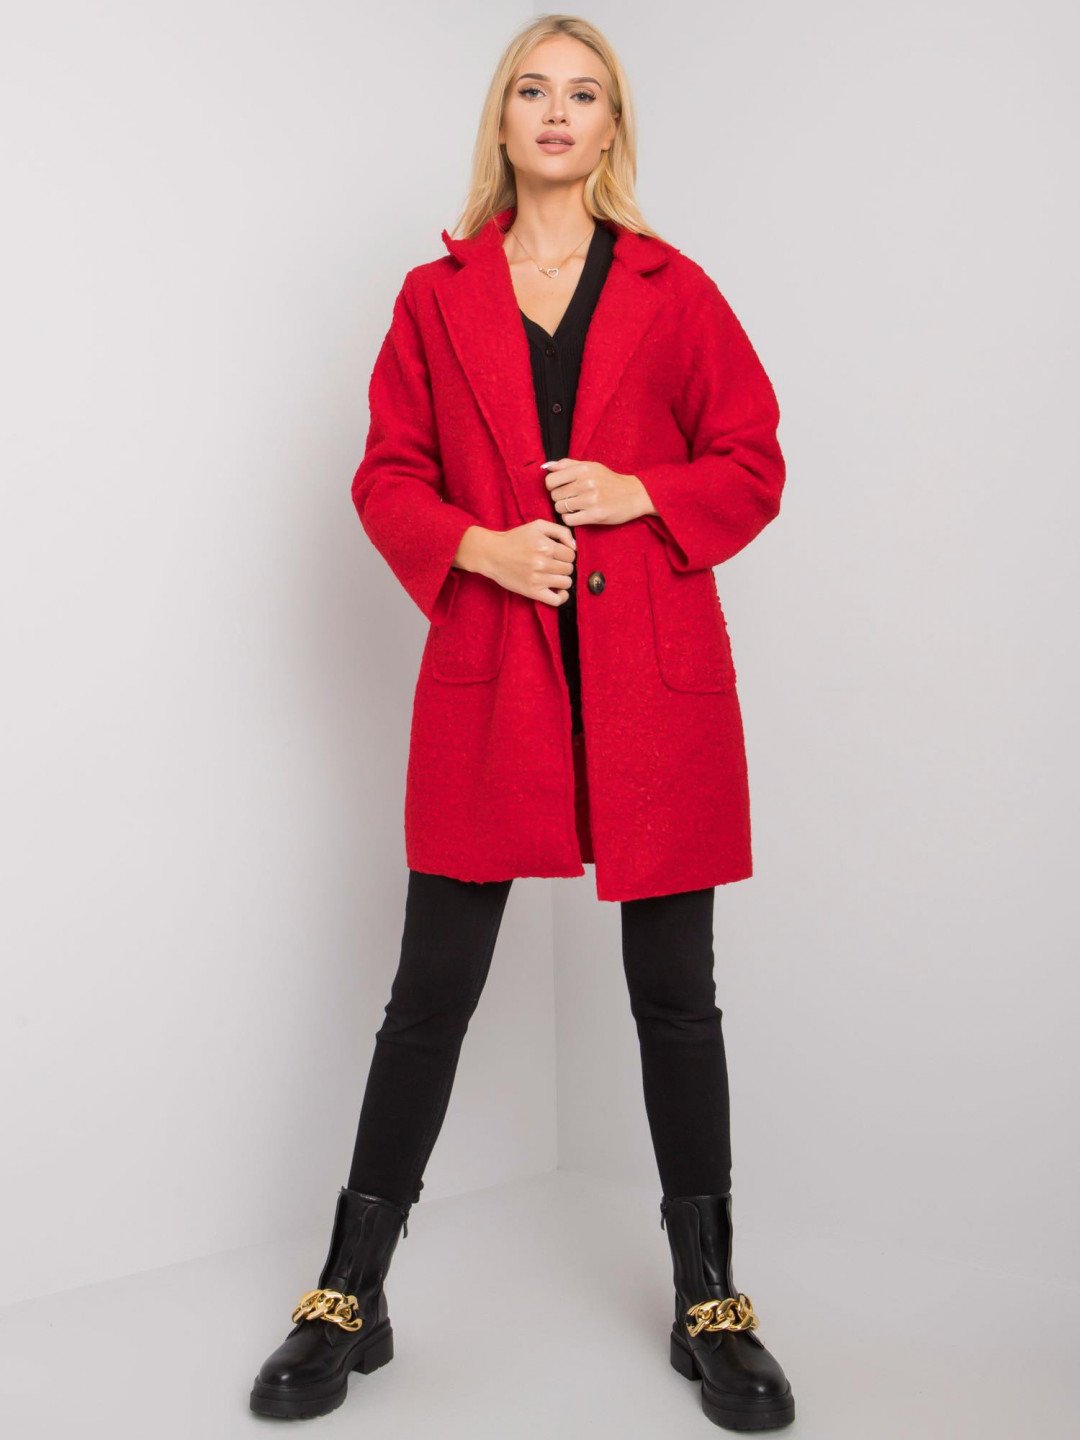 Kabát TW EN BI model 15928063 červená jedna velikost – FPrice